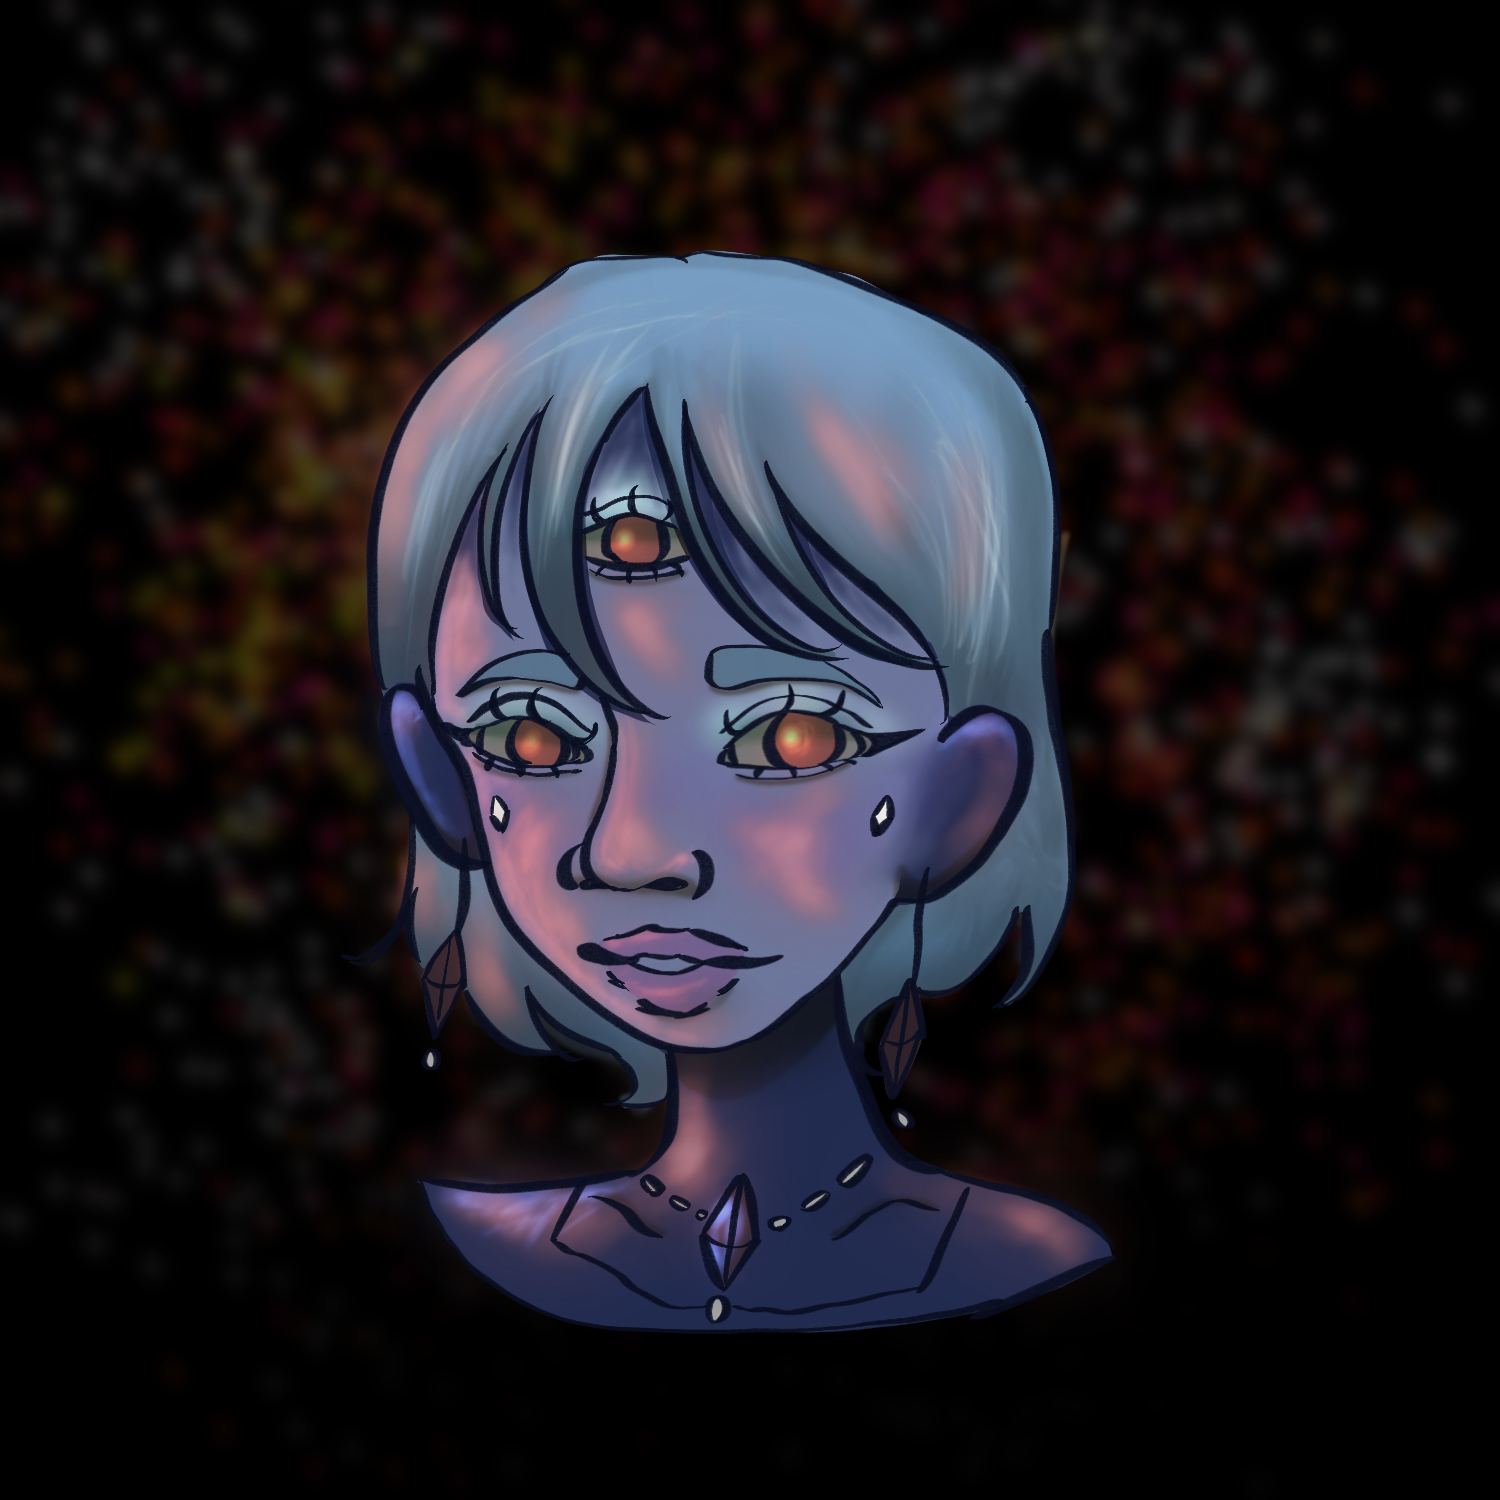 Blue alien girl with 3 eyes